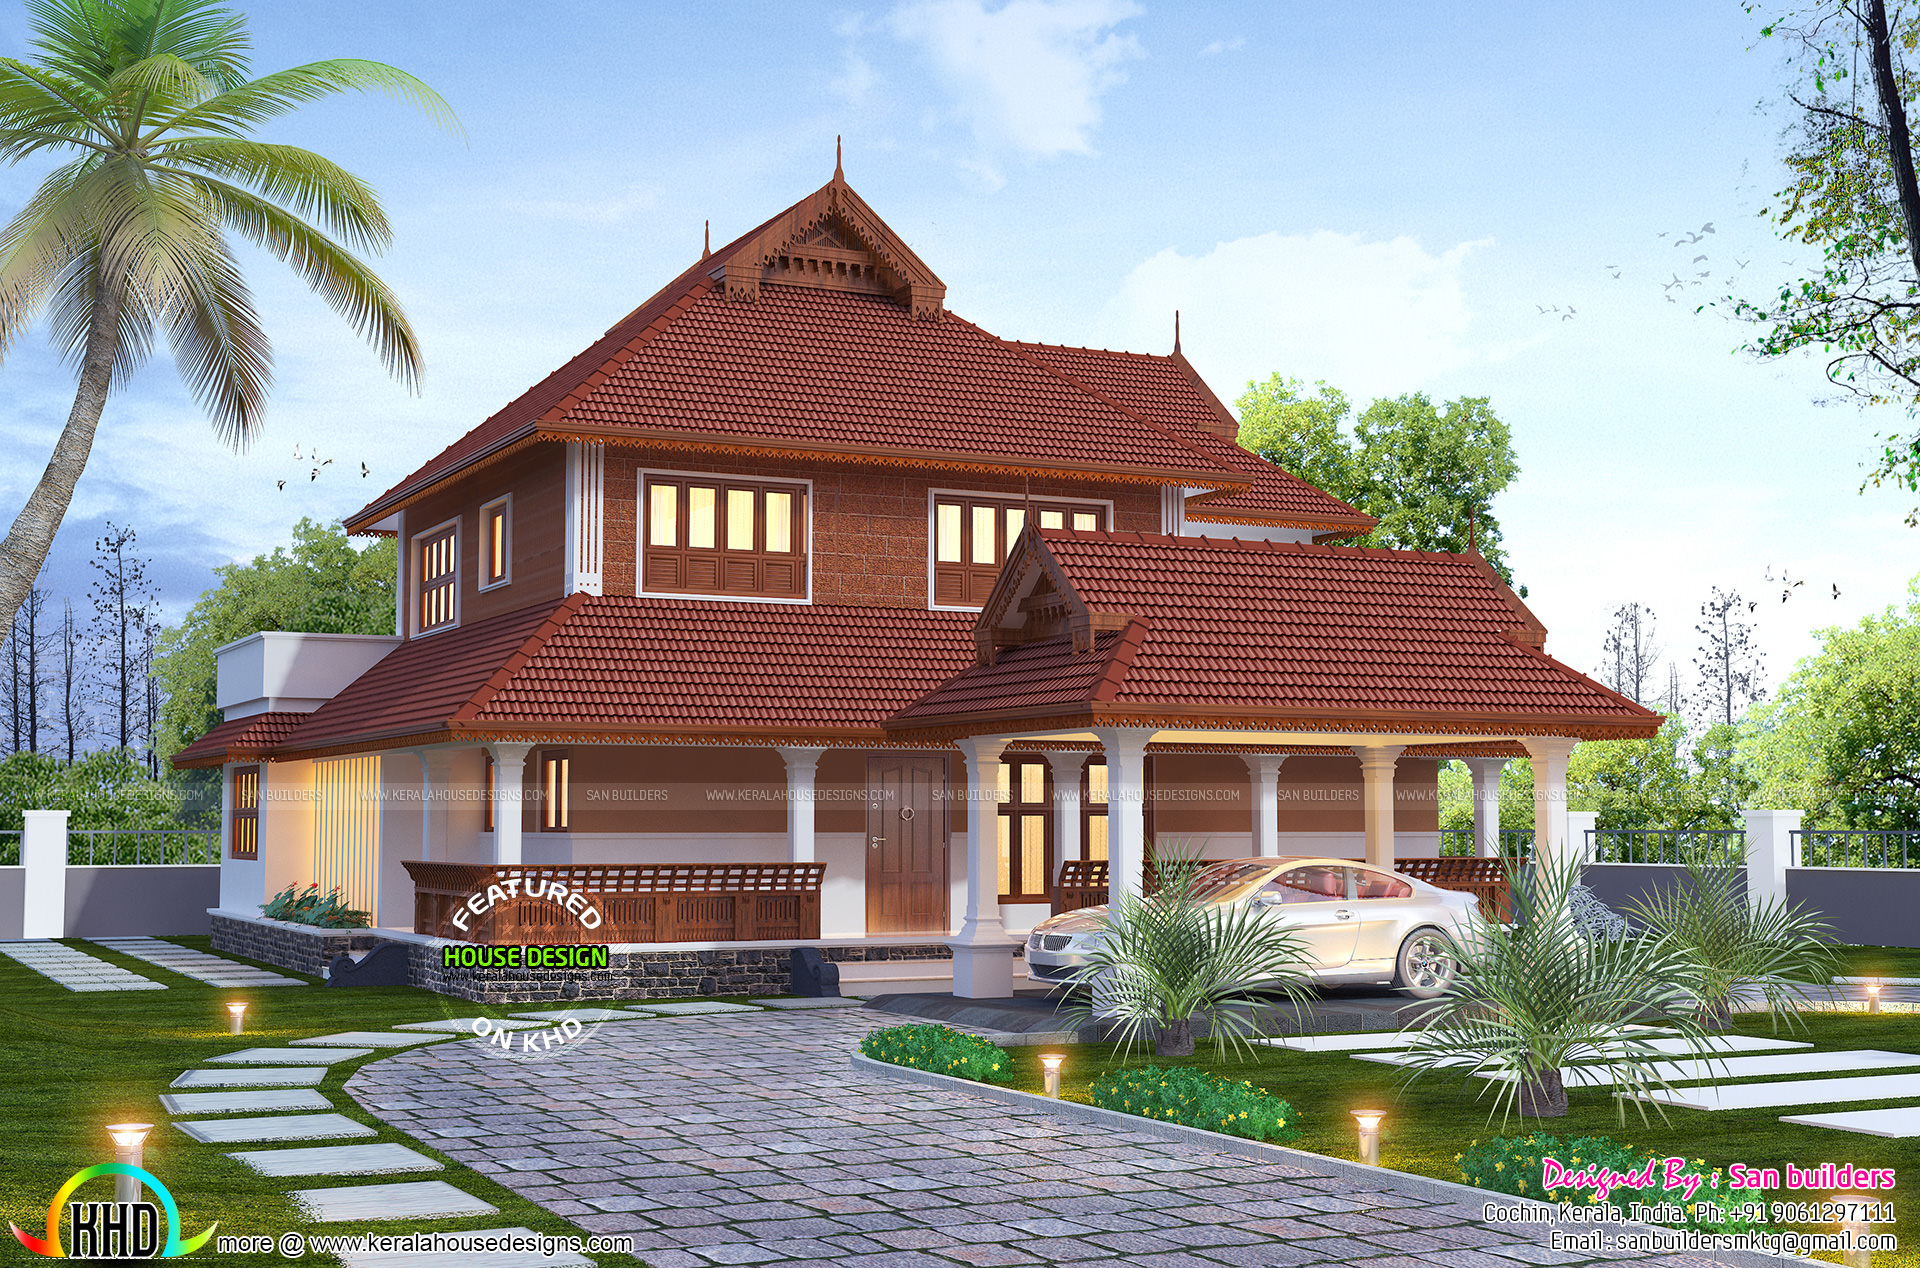 Traditional 2880 sq-ft Kerala home design - Kerala home design and